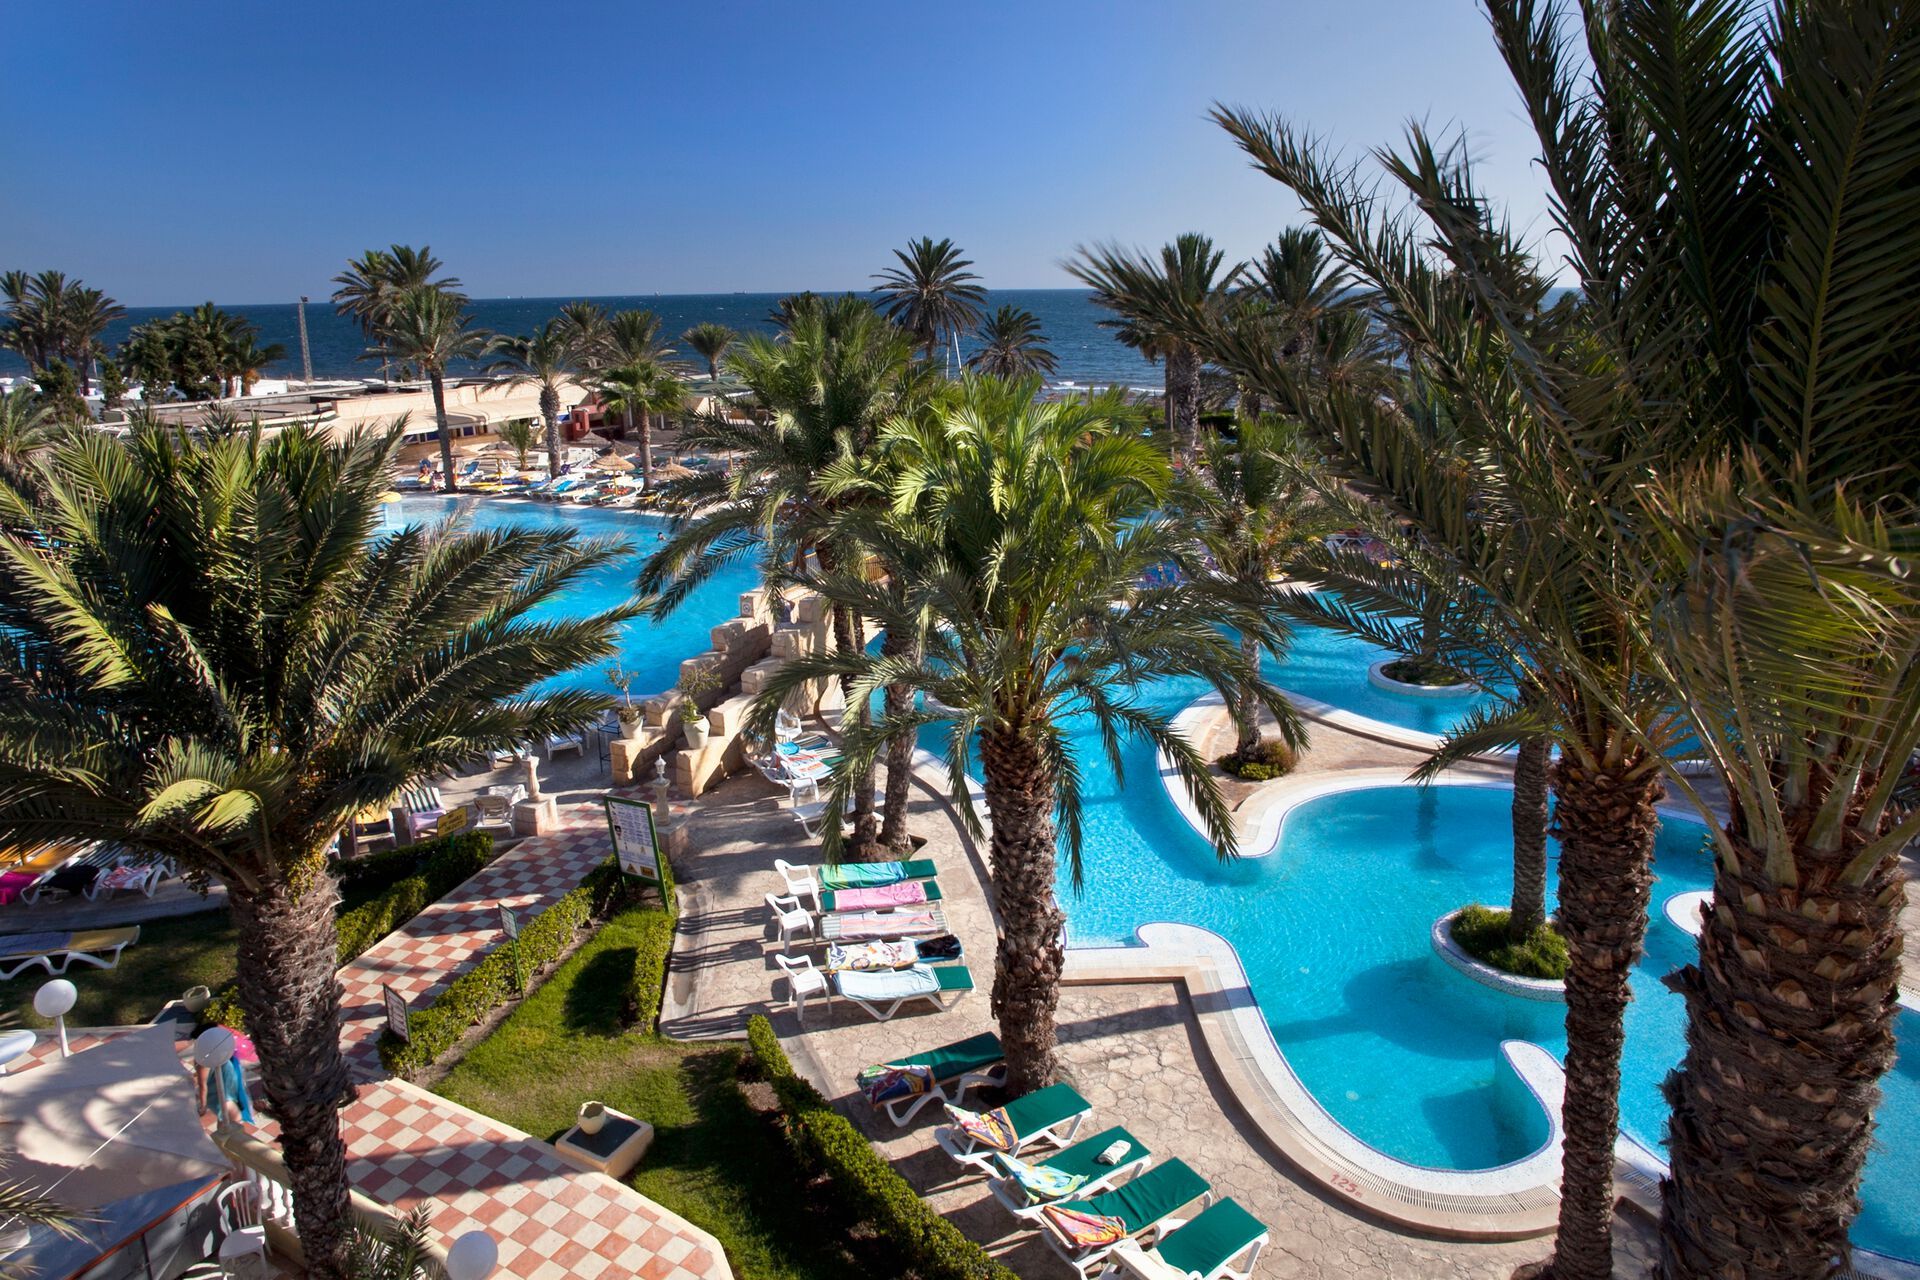 Tunisie - Monastir - Hôtel Houda Golf & Beach Club 3*